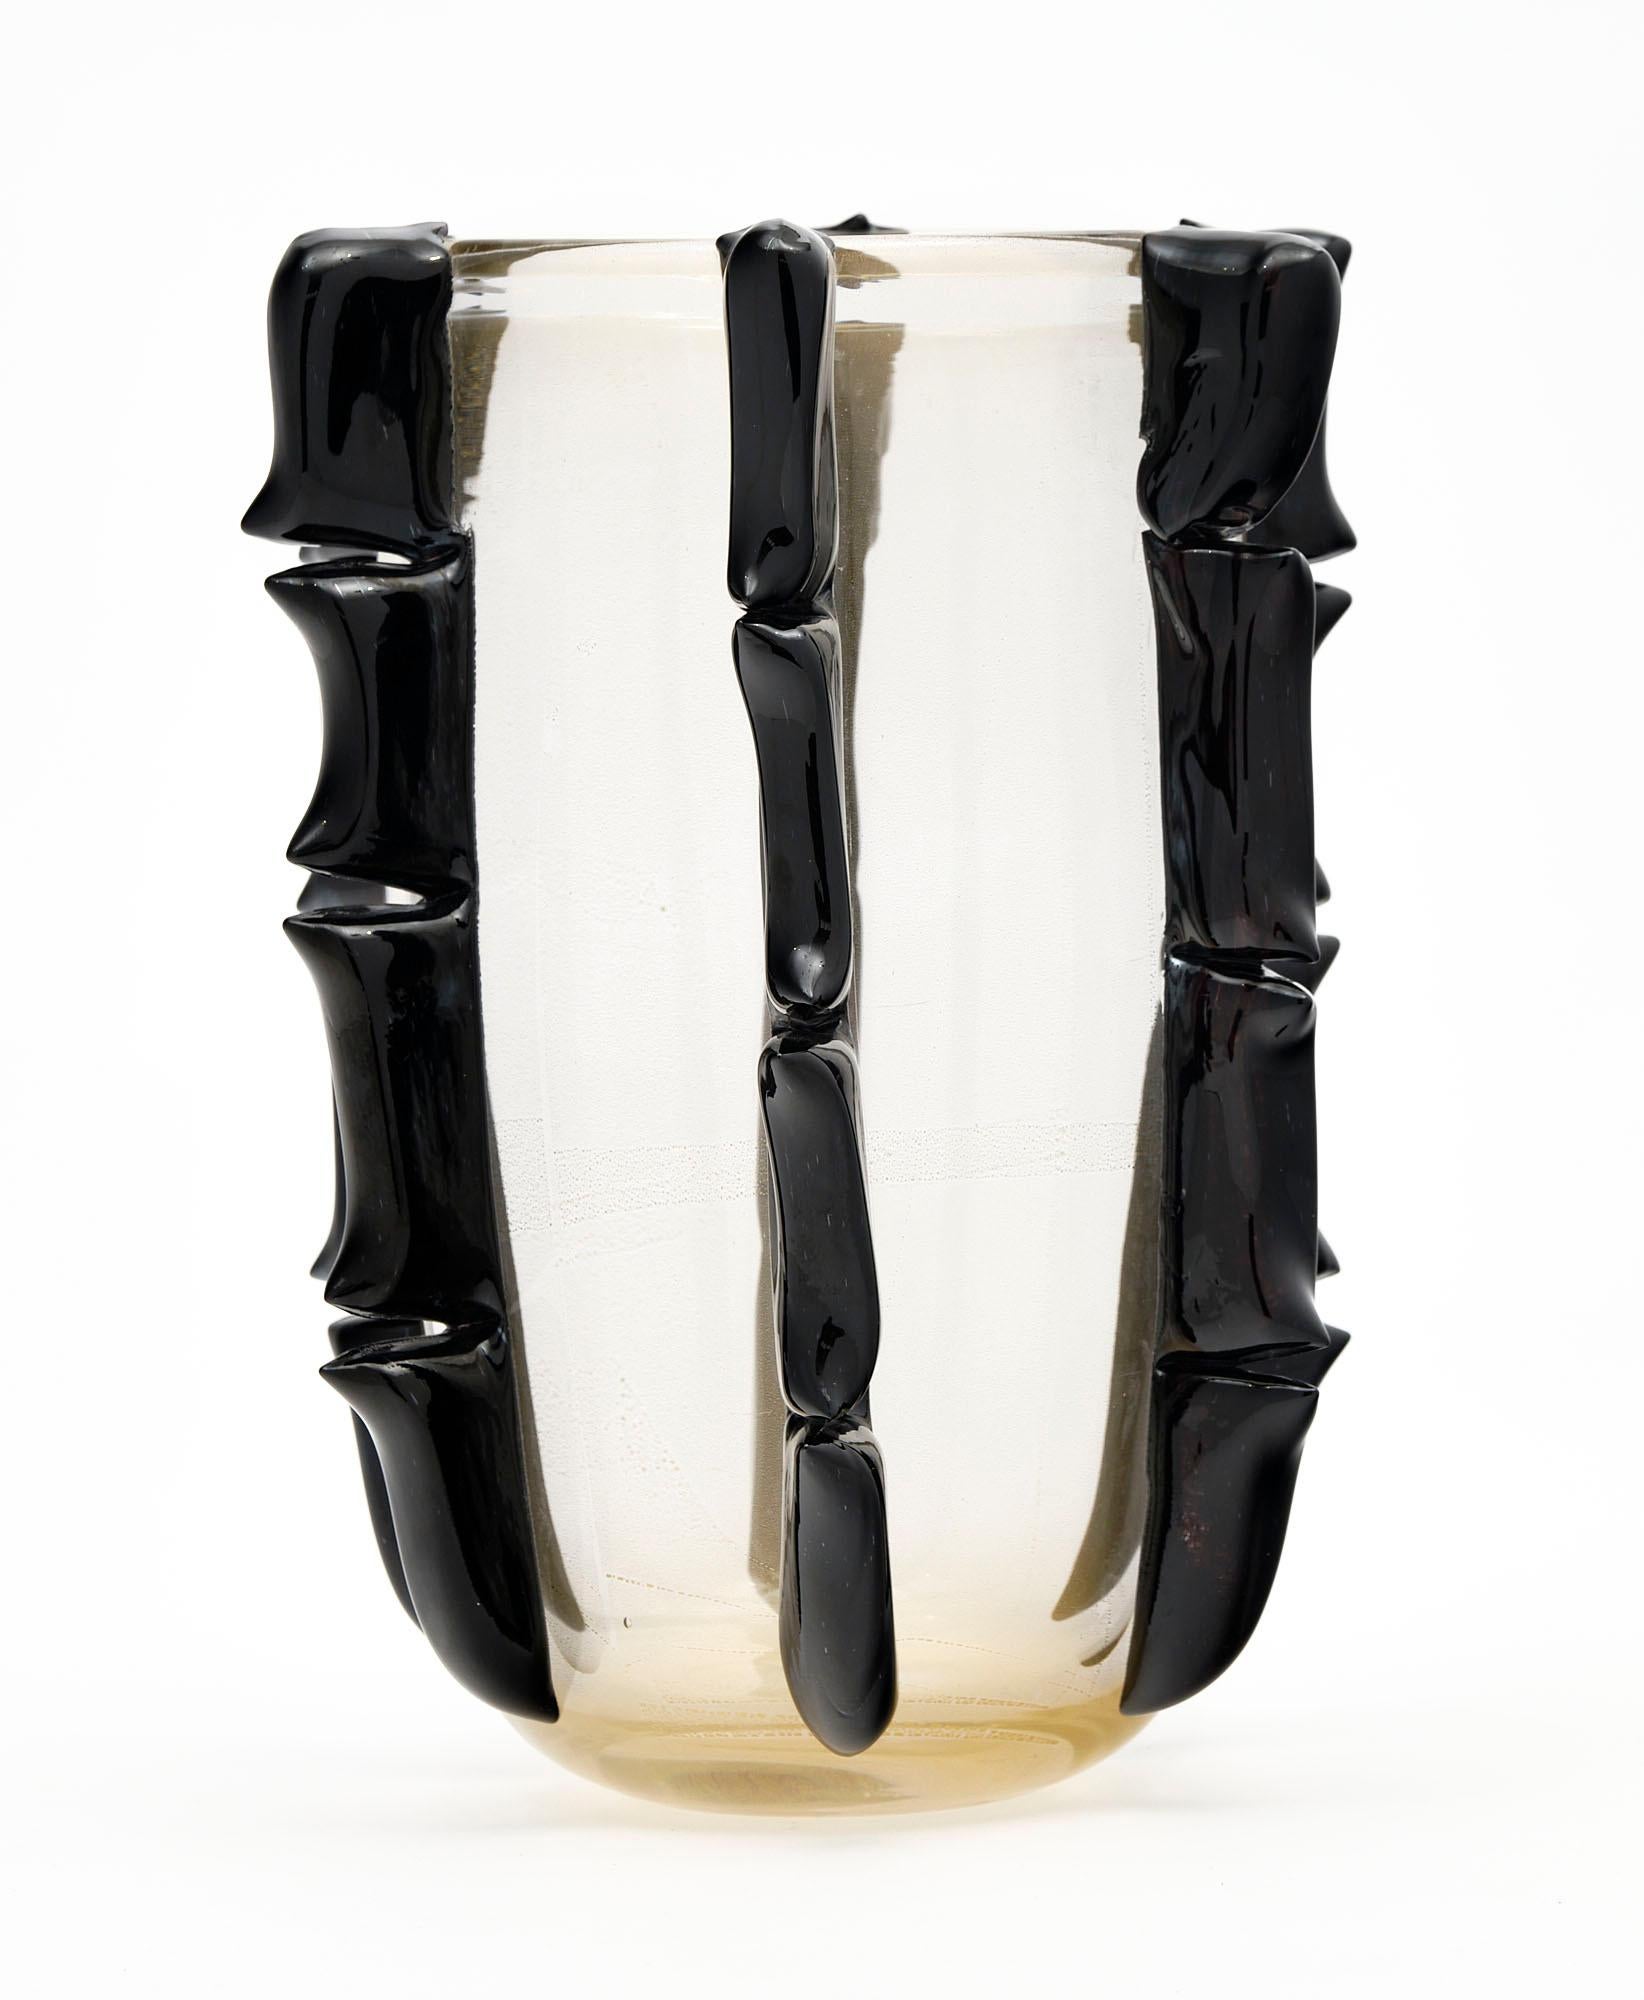 vintage murano glass vases